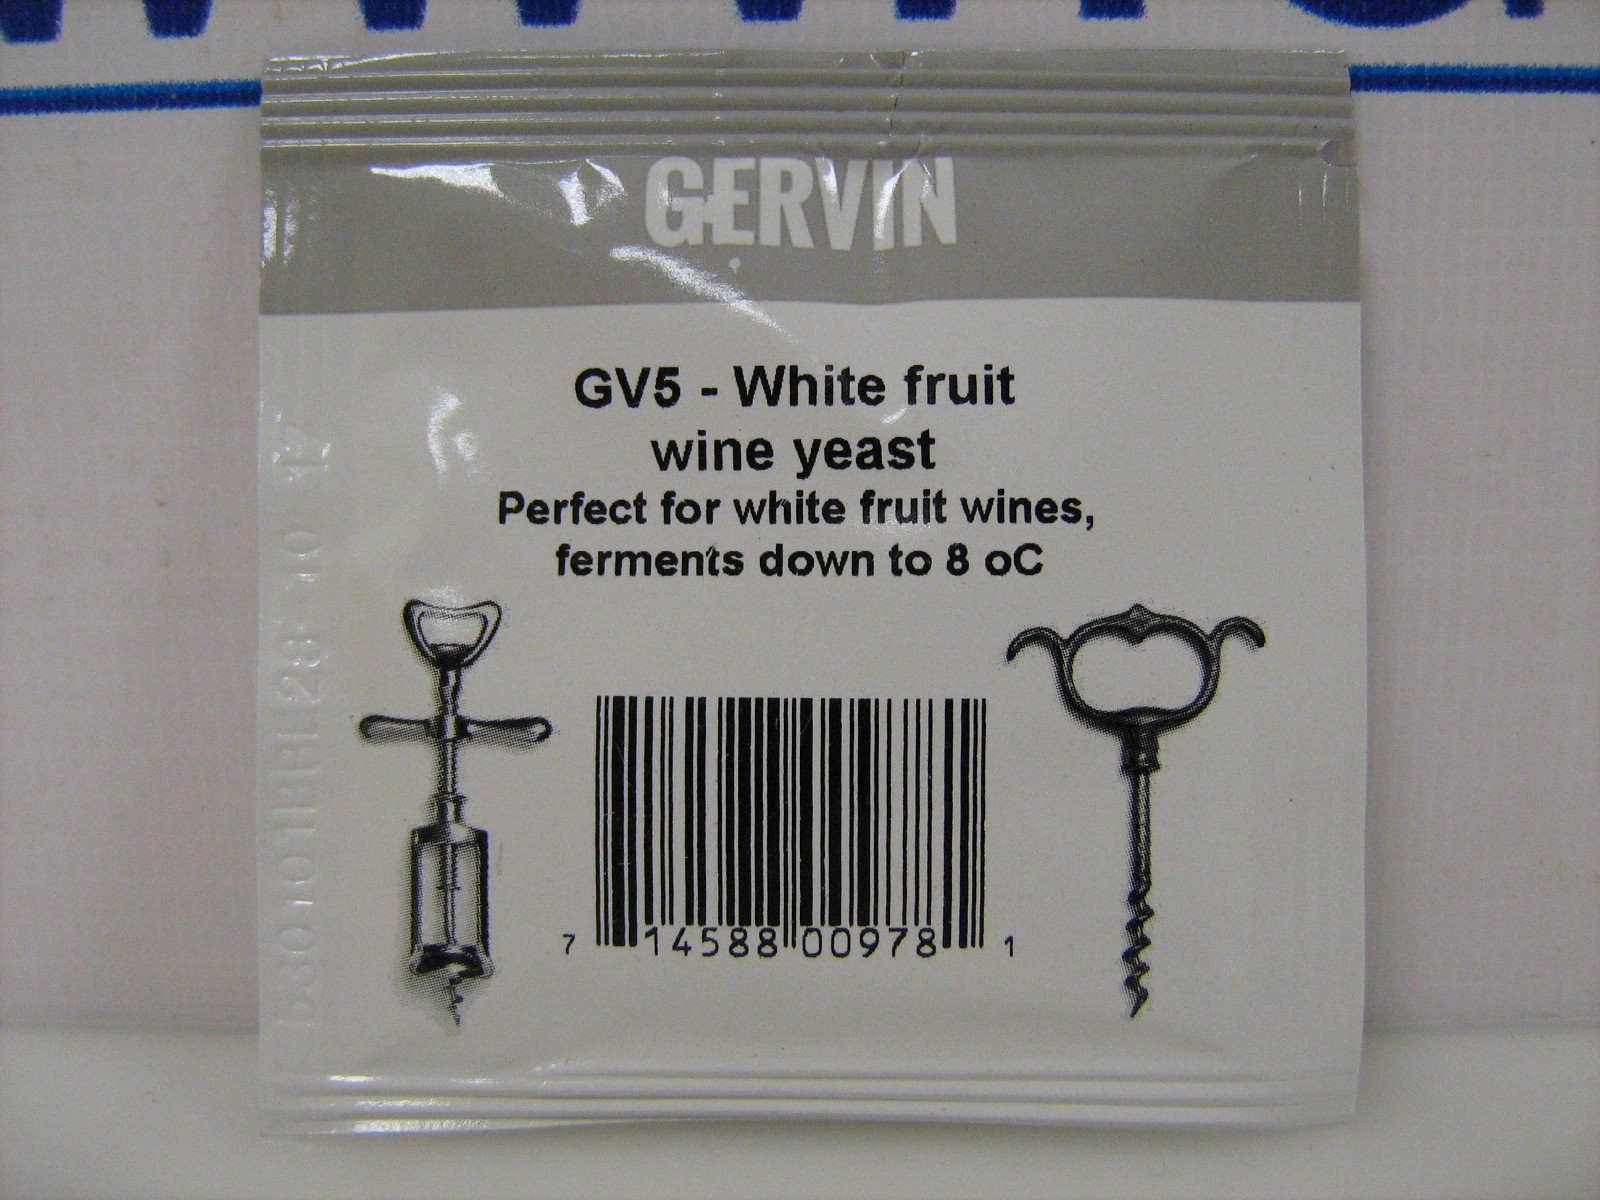 Винные дрожжи Gervin GV5 White Fruit Wine